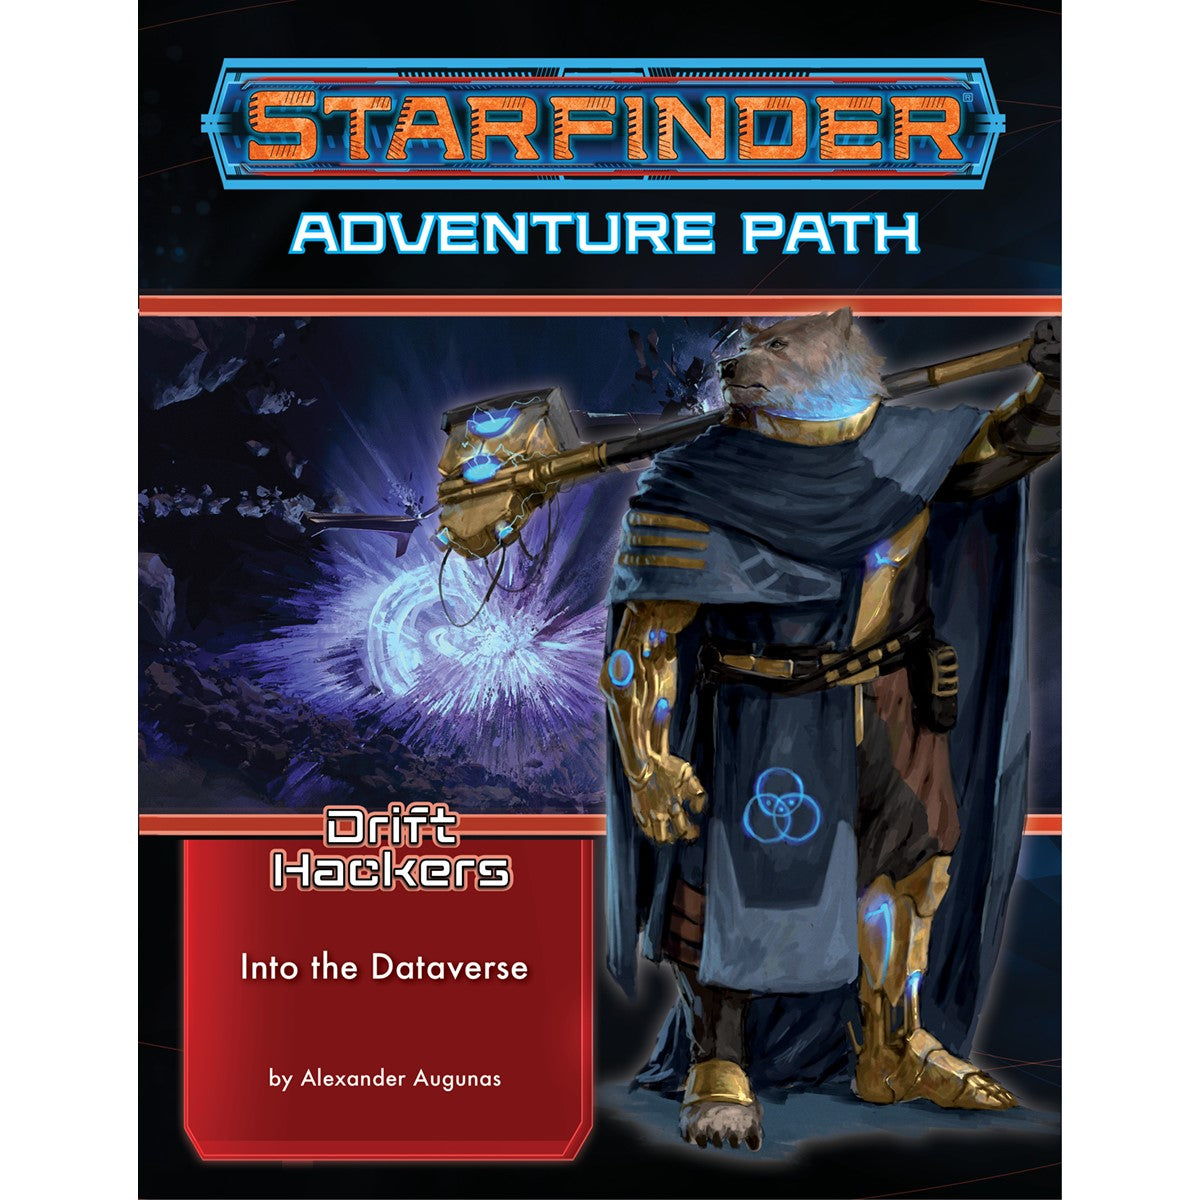 Starfinder RPG Adventure Path Drift Hackers #3 Into the Dataverse